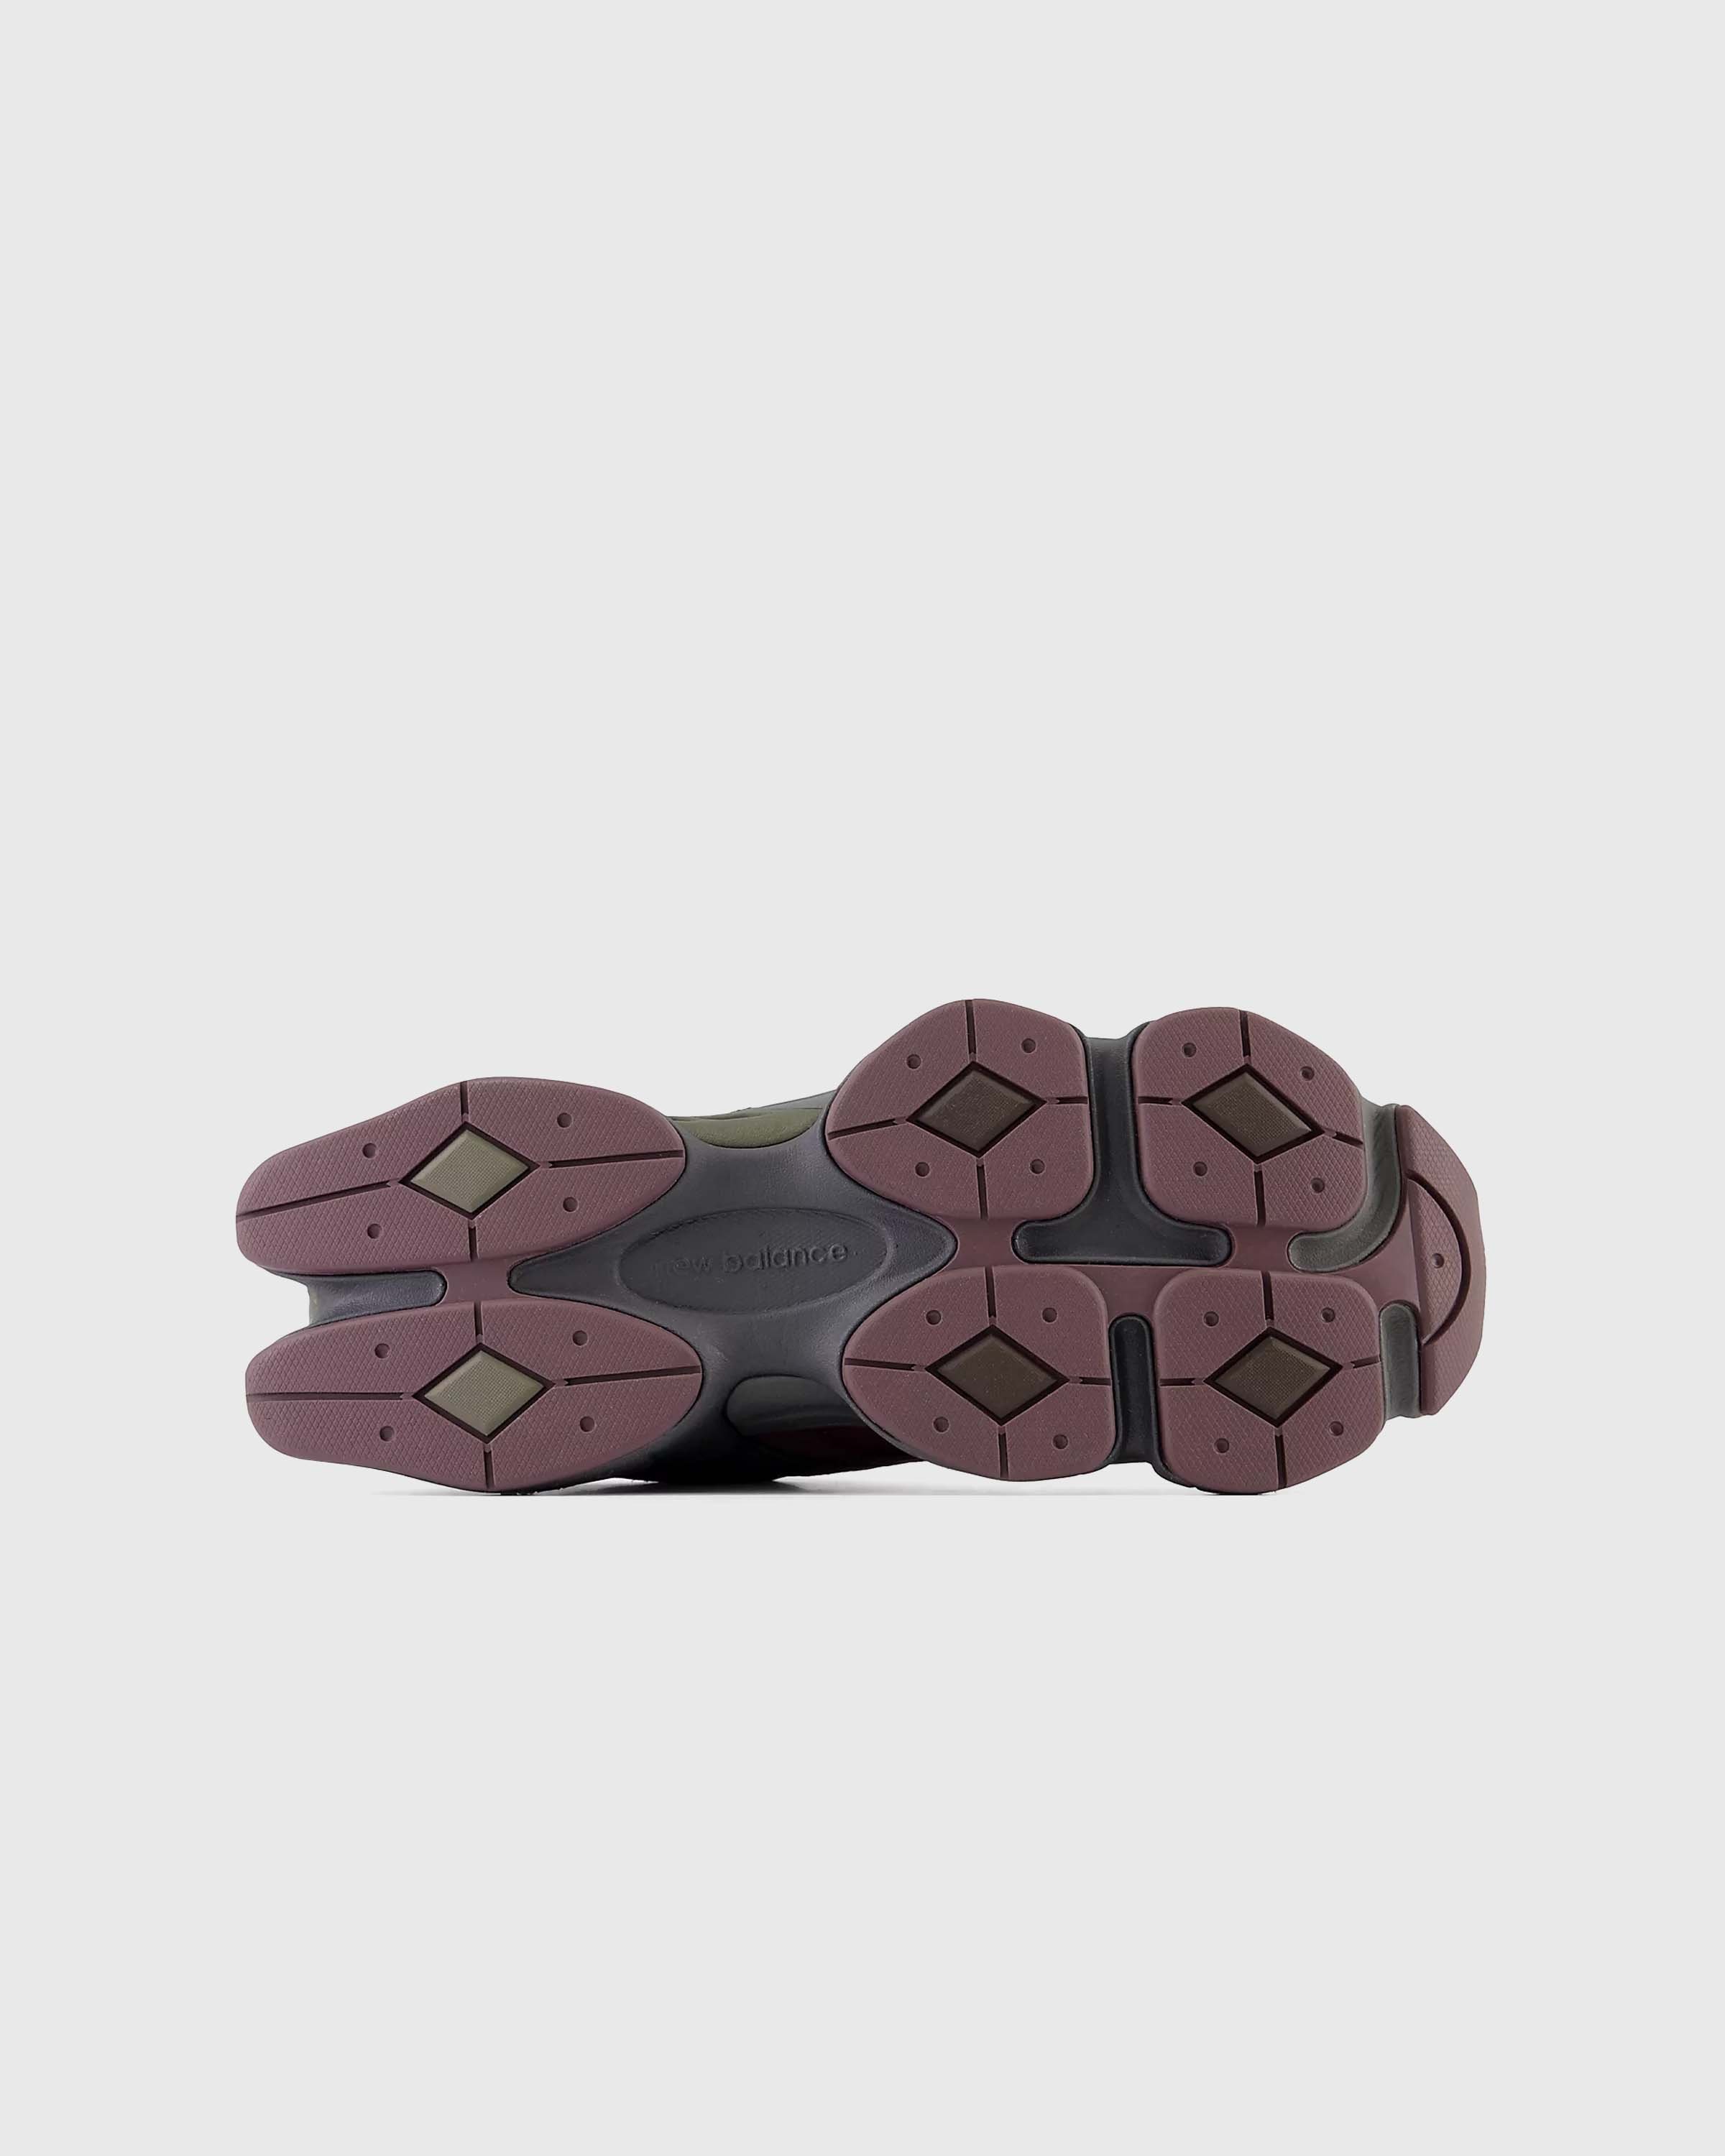 New Balance - U9060BCG Truffle - Footwear - Beige - Image 6